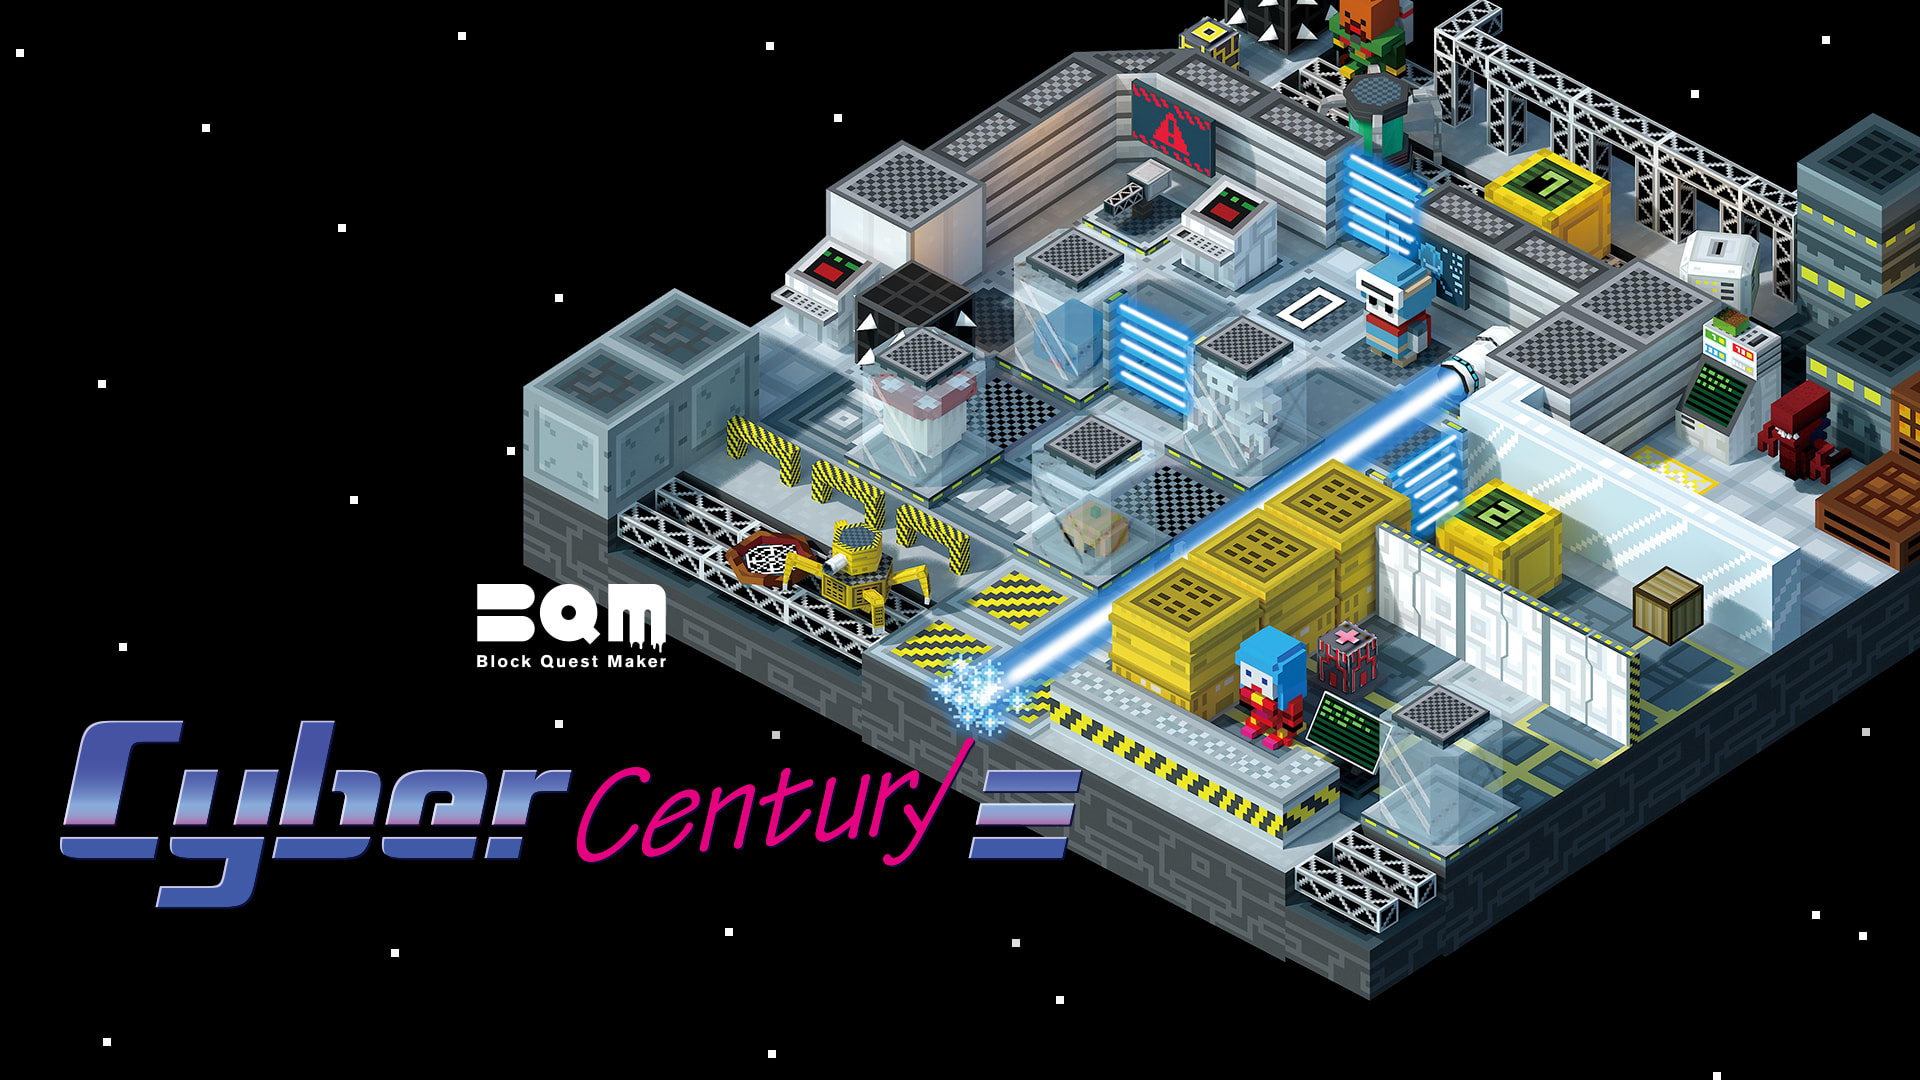 2nd DLC "Cyber Century"